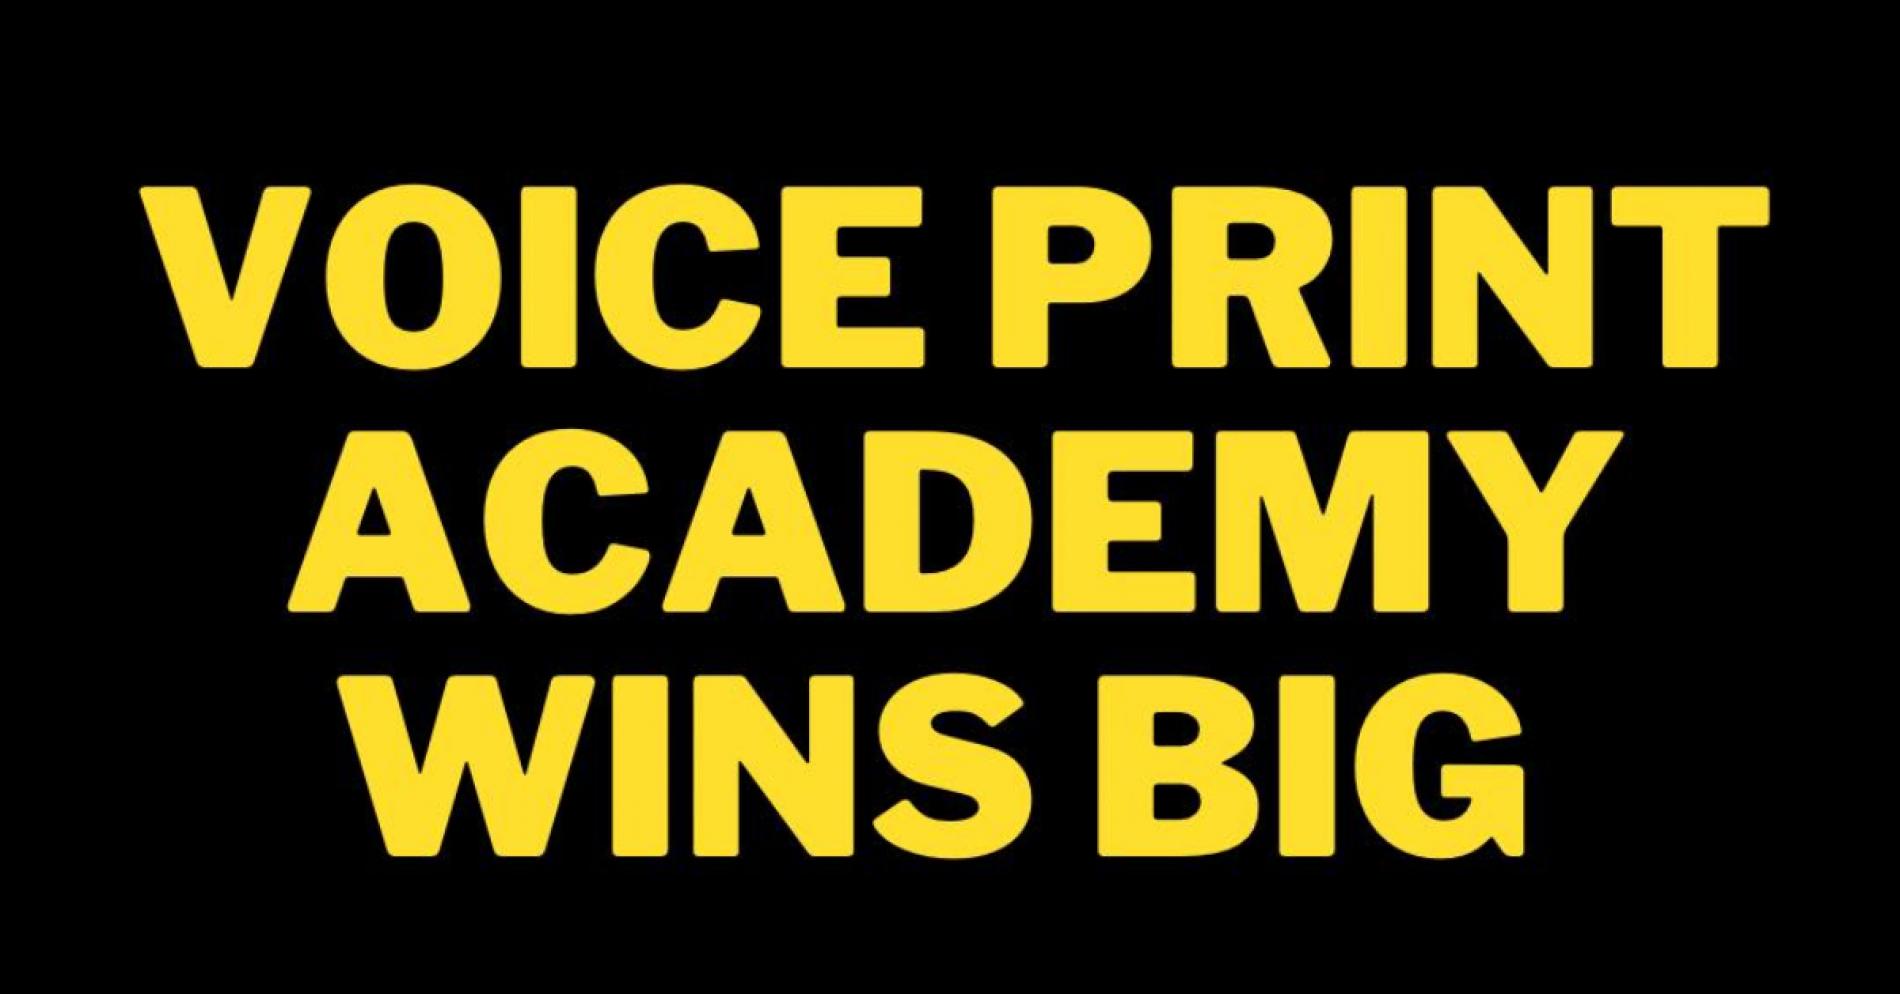 The Voice Print Academy Wins BIG!